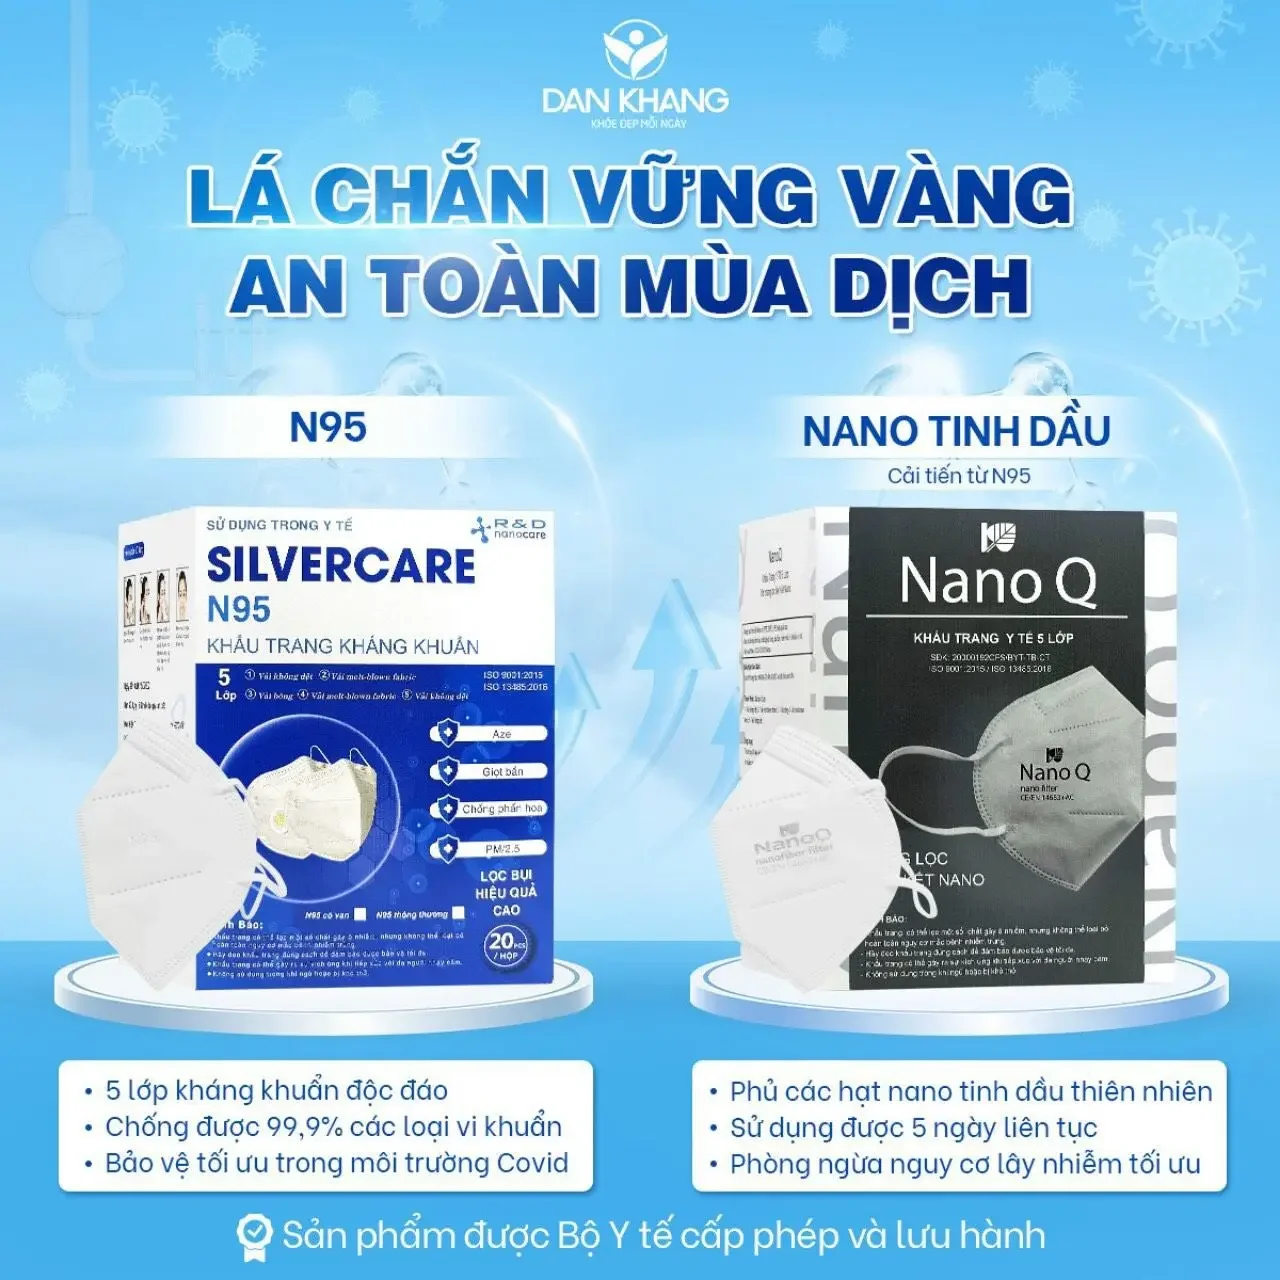 N95 silvercare và N95 NaNoQ